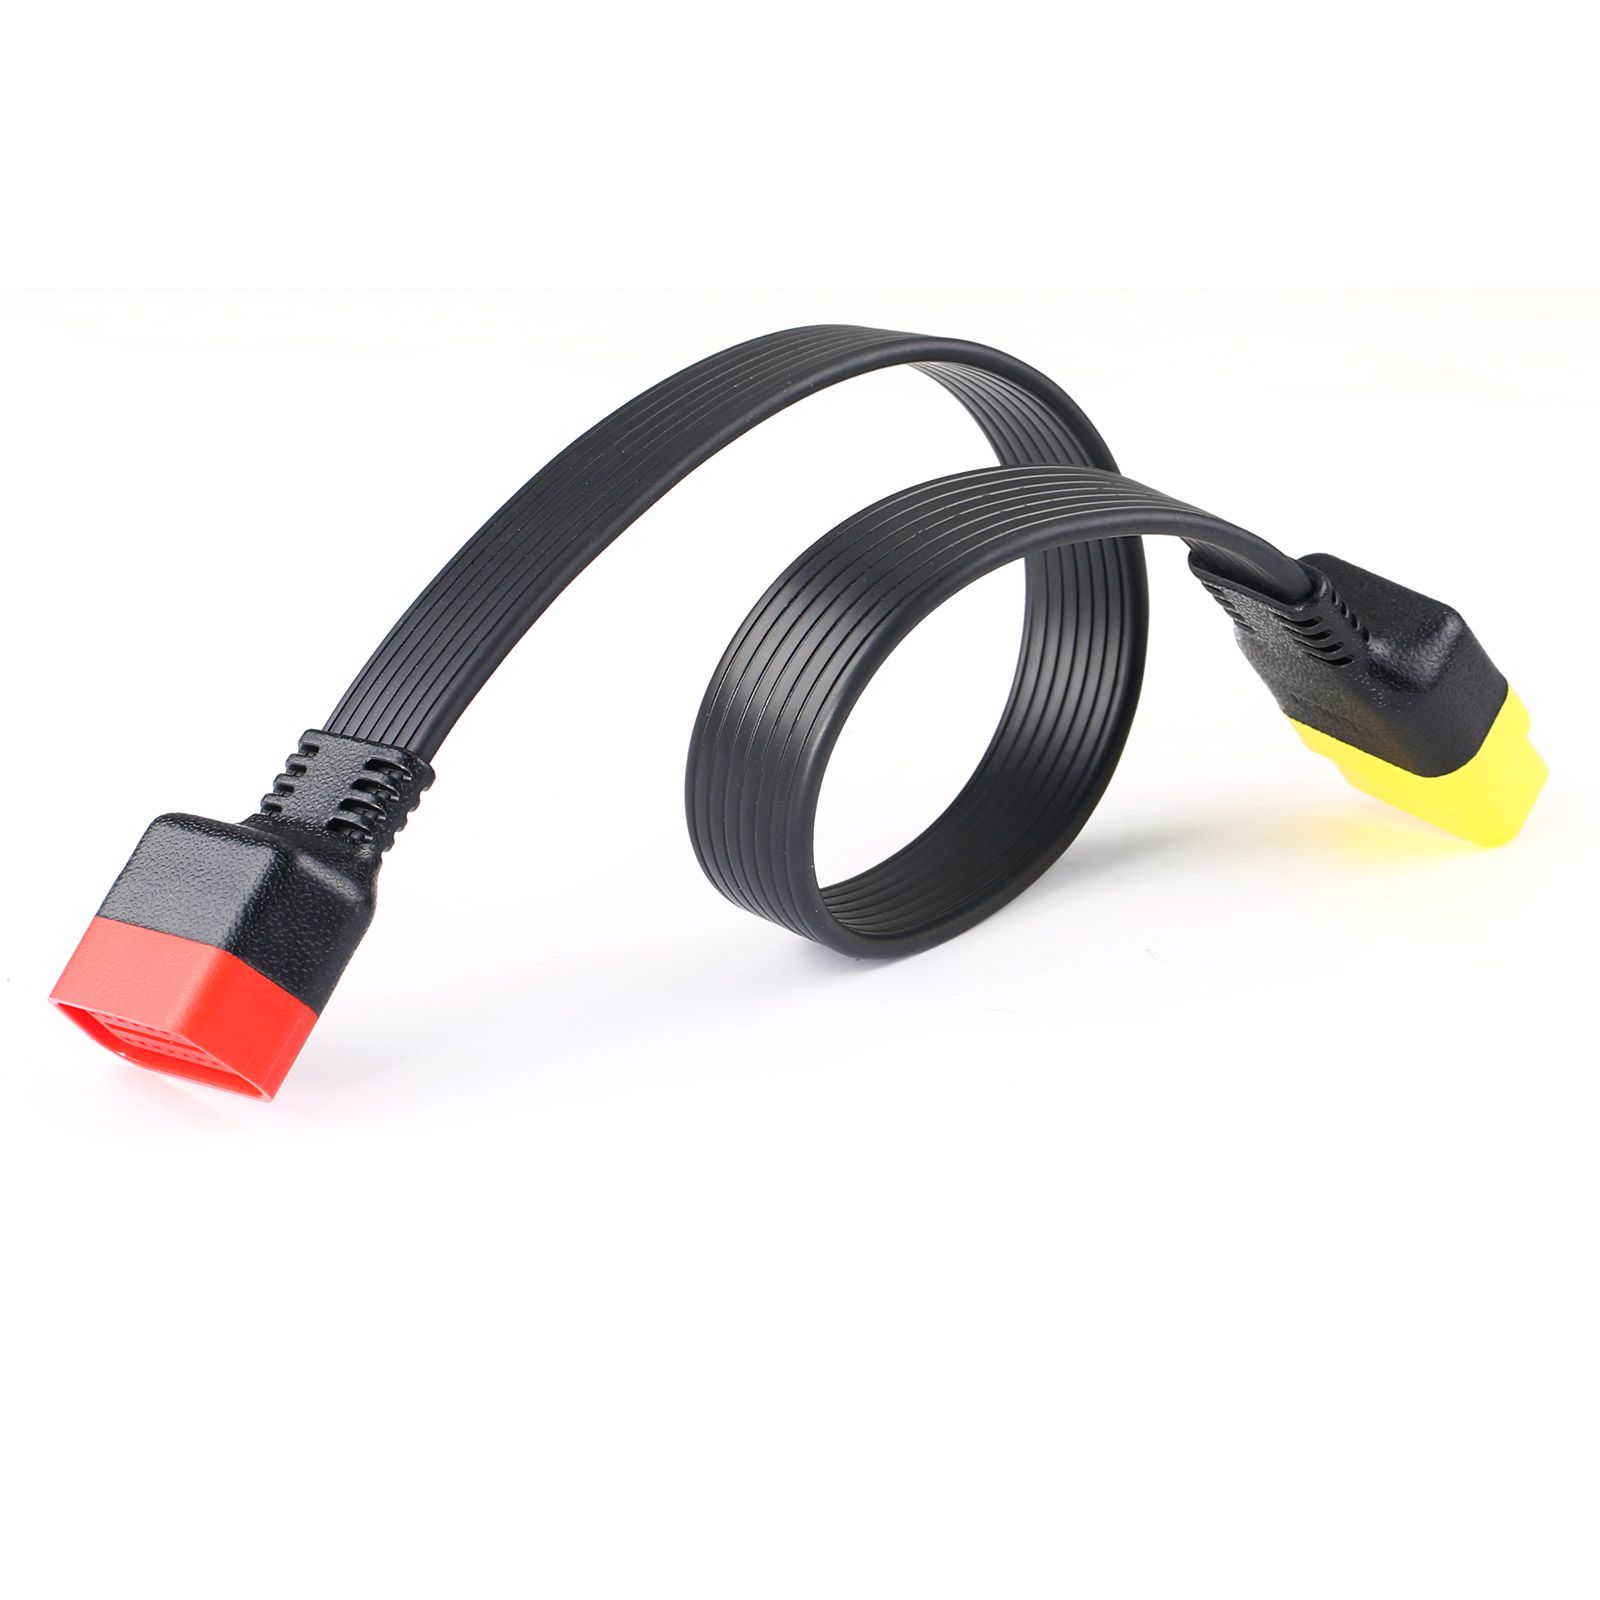 Cable de extensión obd2 16 Pin 23.6in / 60cm para activar x431 idiag / easydiag / x431 M - diag / x431v / V + / 5c Pro